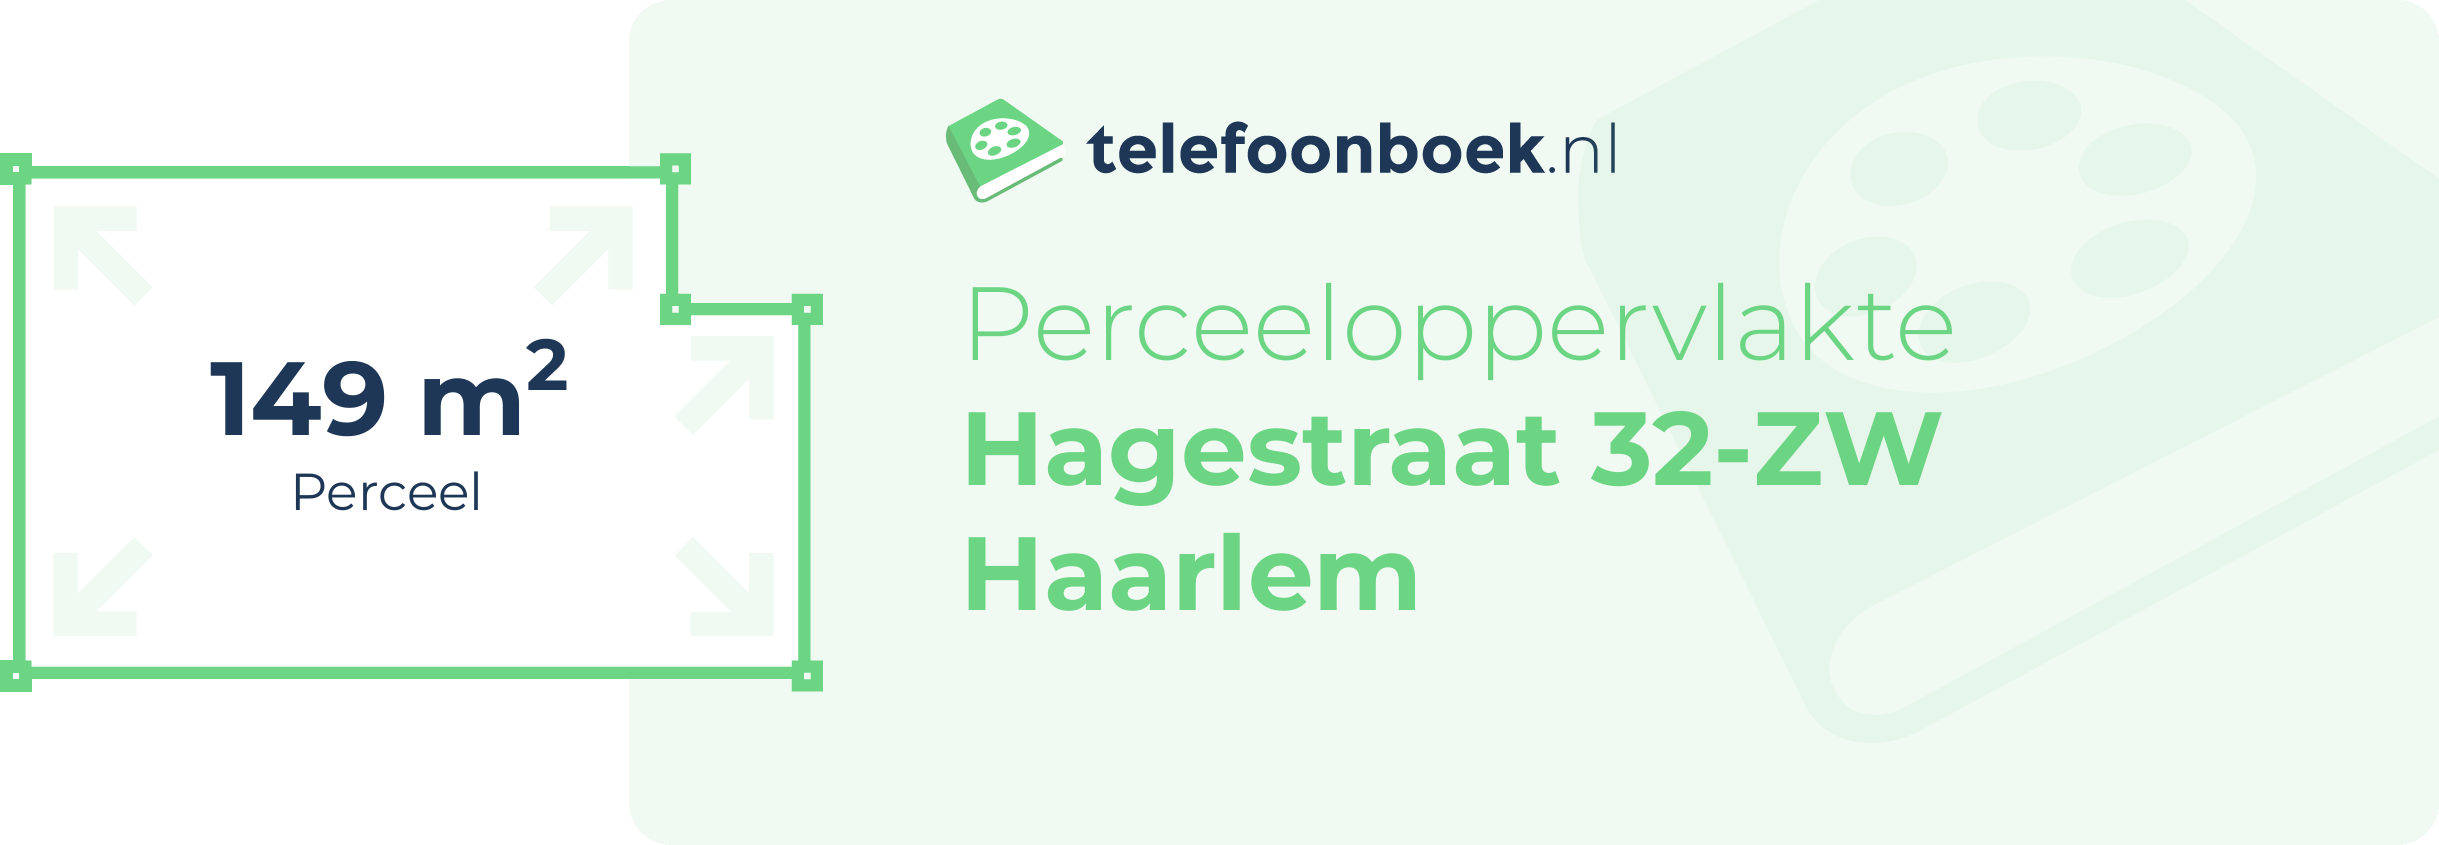 Perceeloppervlakte Hagestraat 32-ZW Haarlem